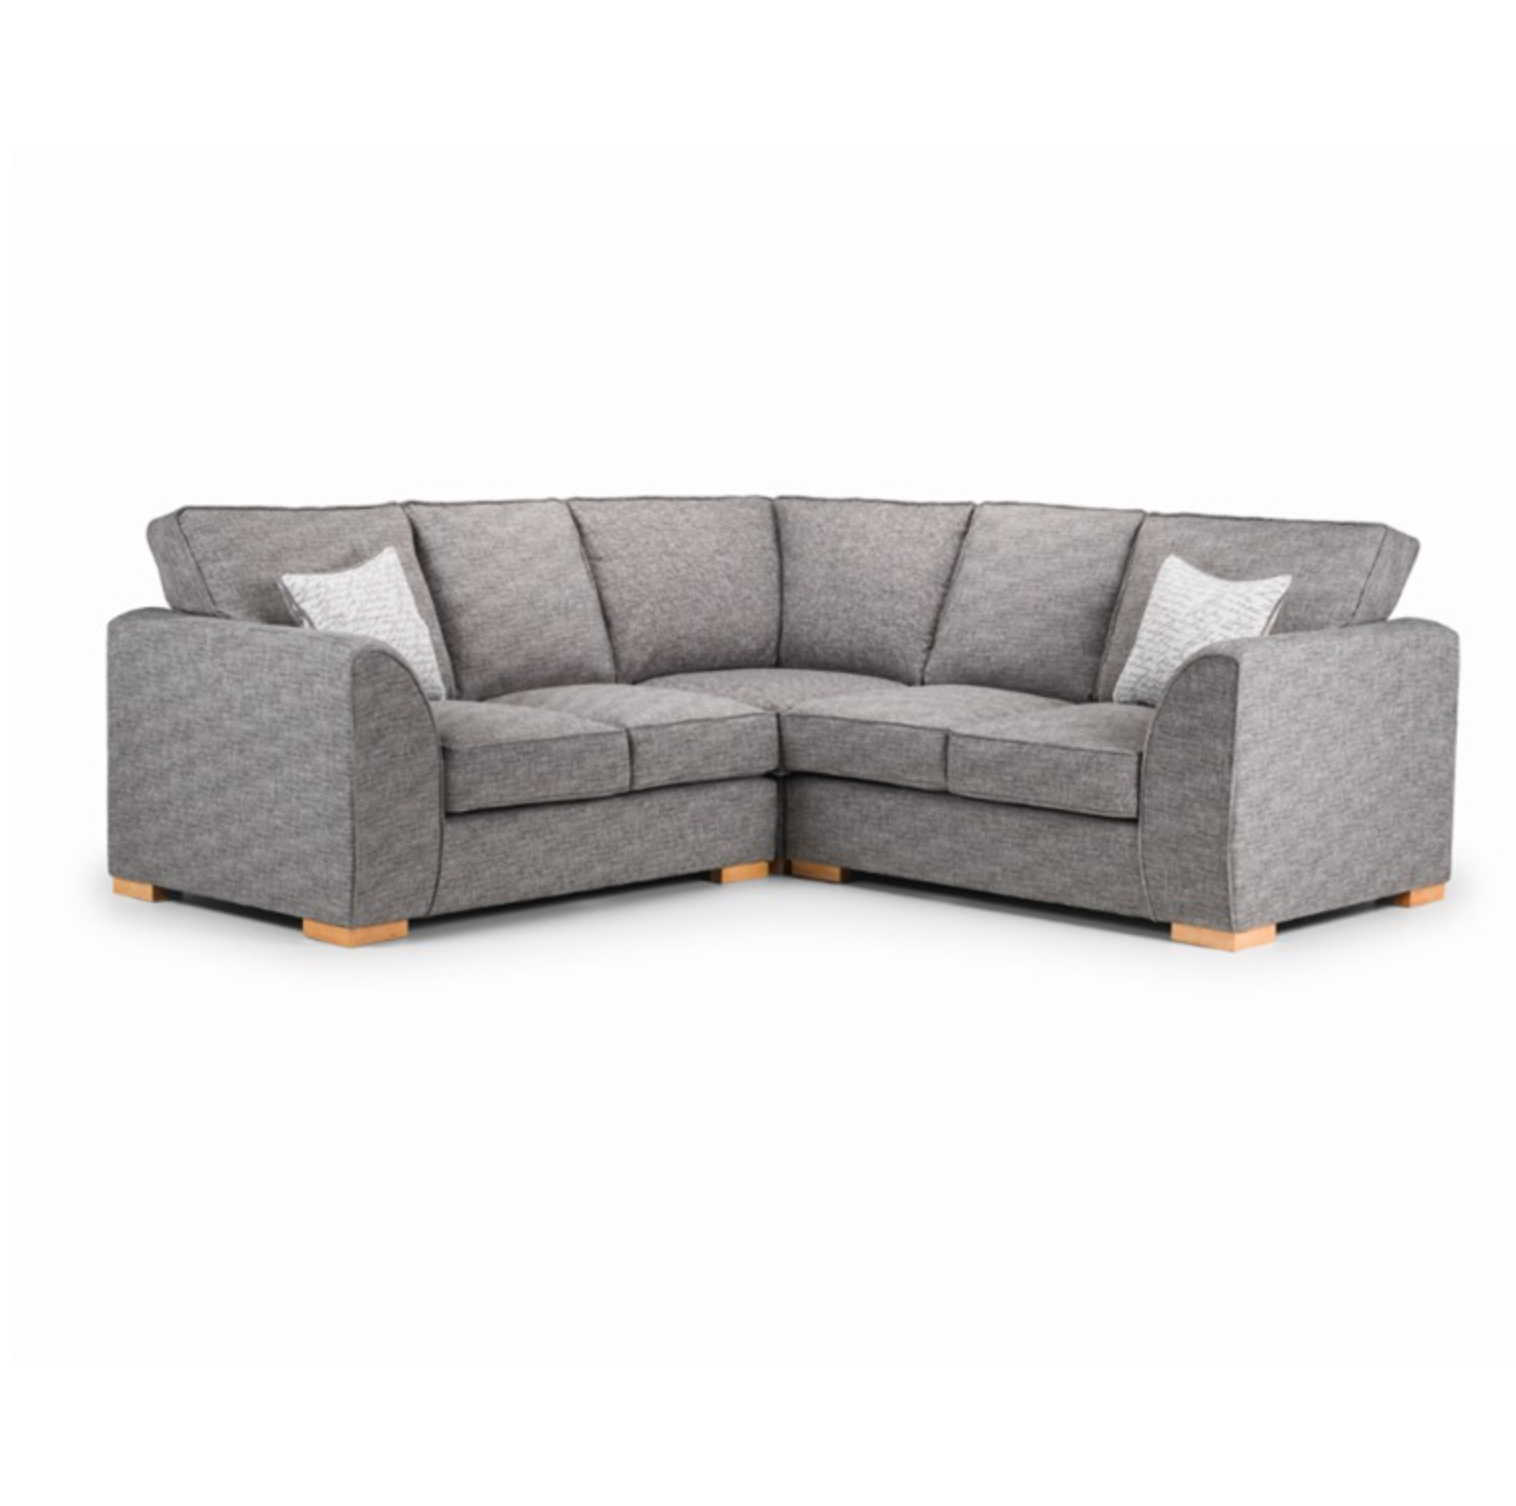 Healy Large Corner Sofa Como Charcoal Fabric